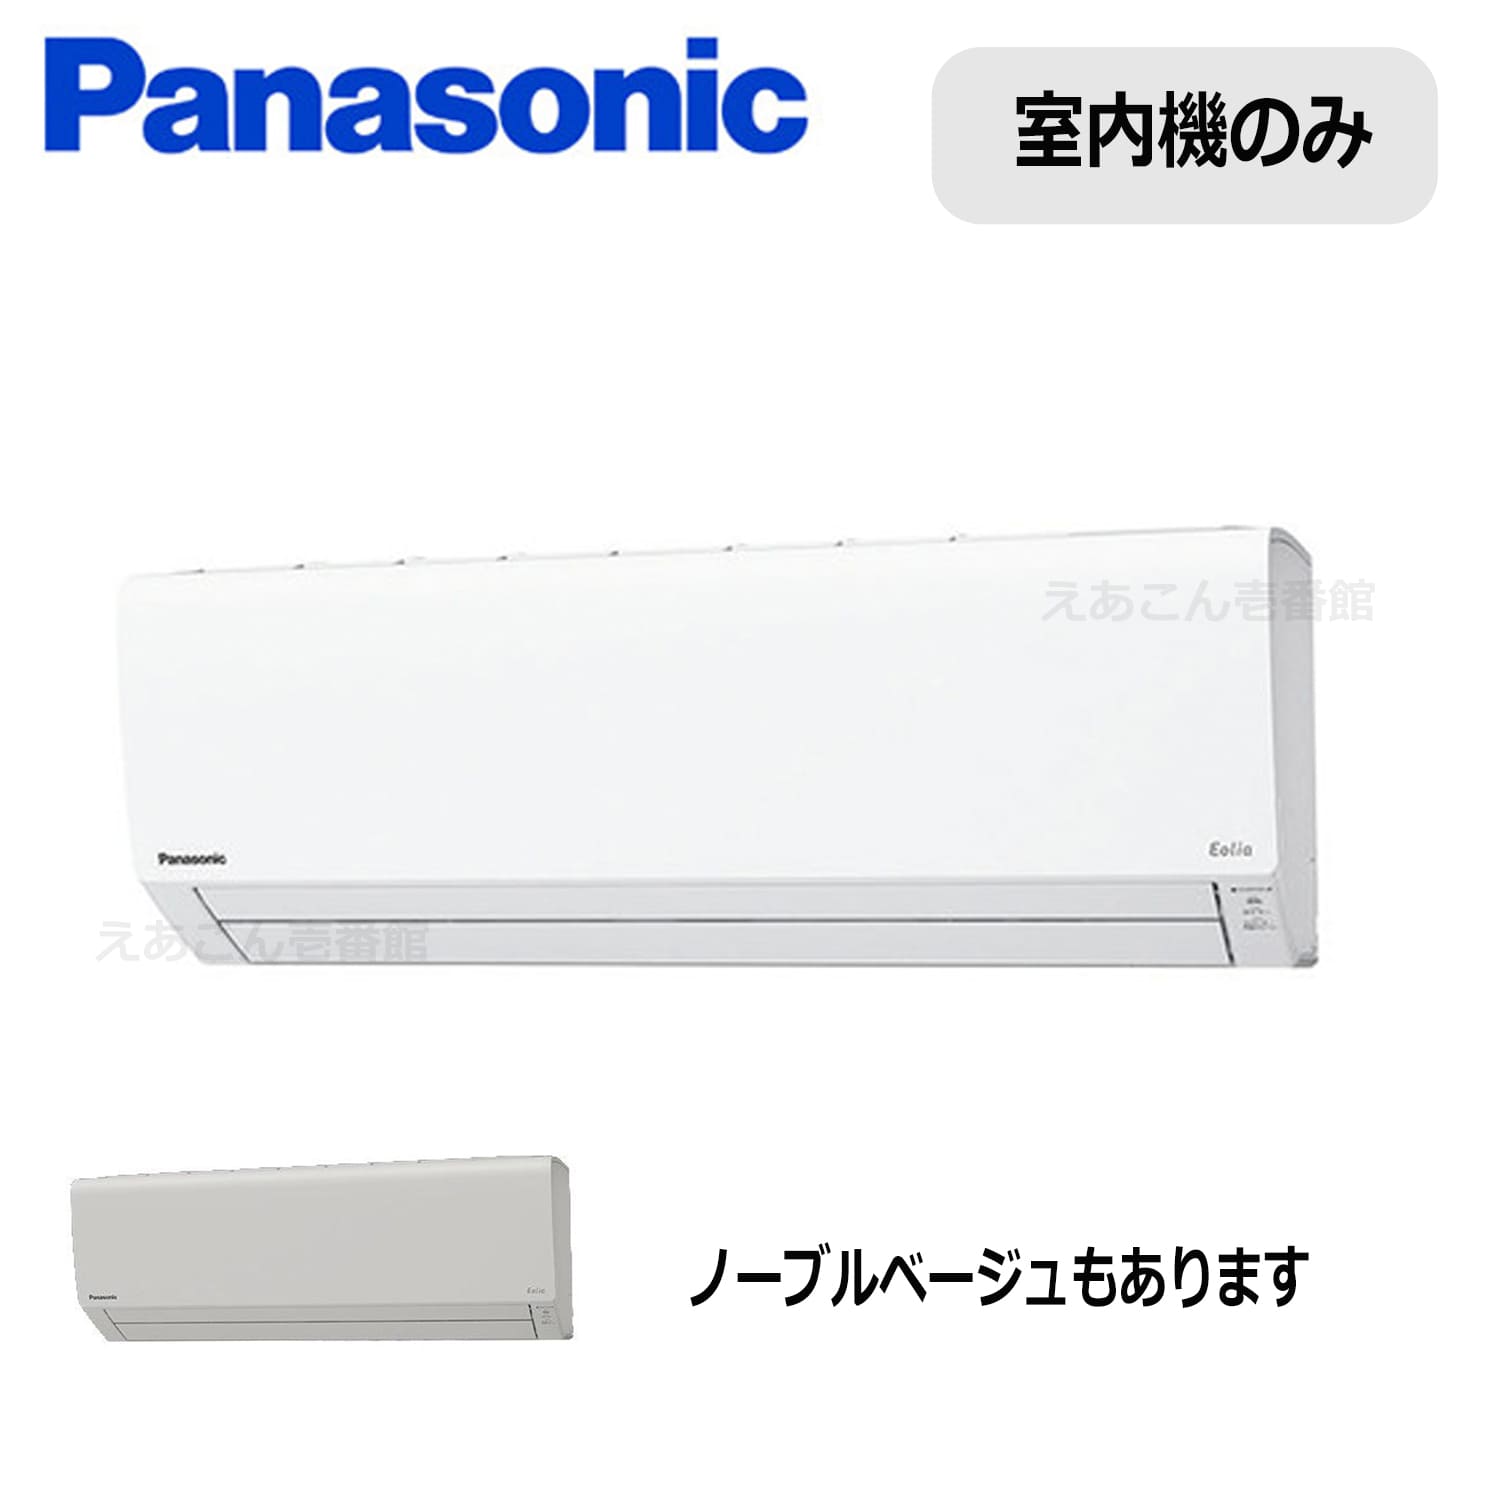 Panasonic  CS-MJ360D2  壁掛形　3.6kw　システムマルチ室内機（単相　200V　ワイヤレス）主に12畳用　※室内機のみの為別途室外機が必要となります。